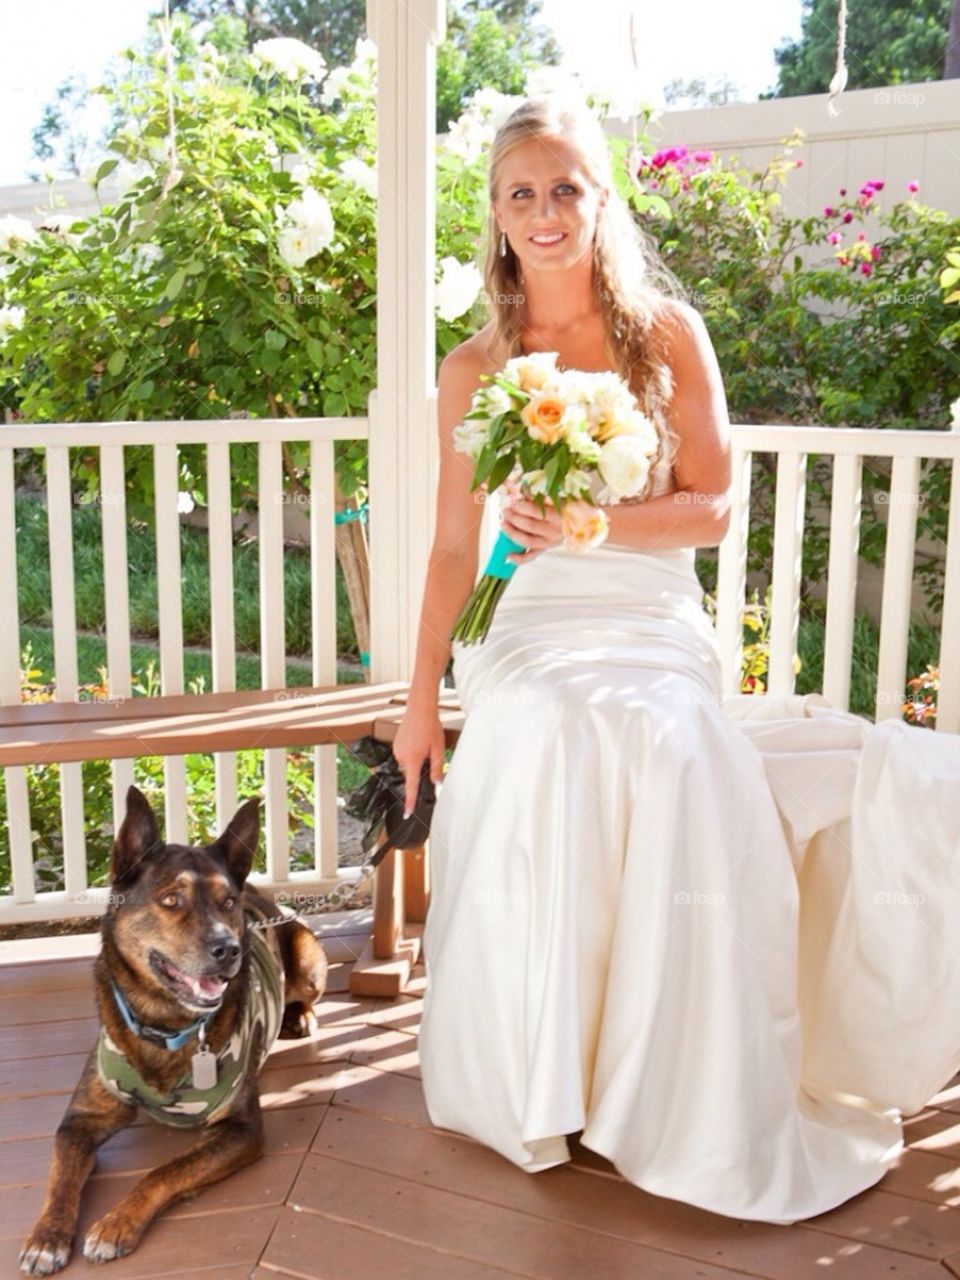 Bride and ring bearer pet dog